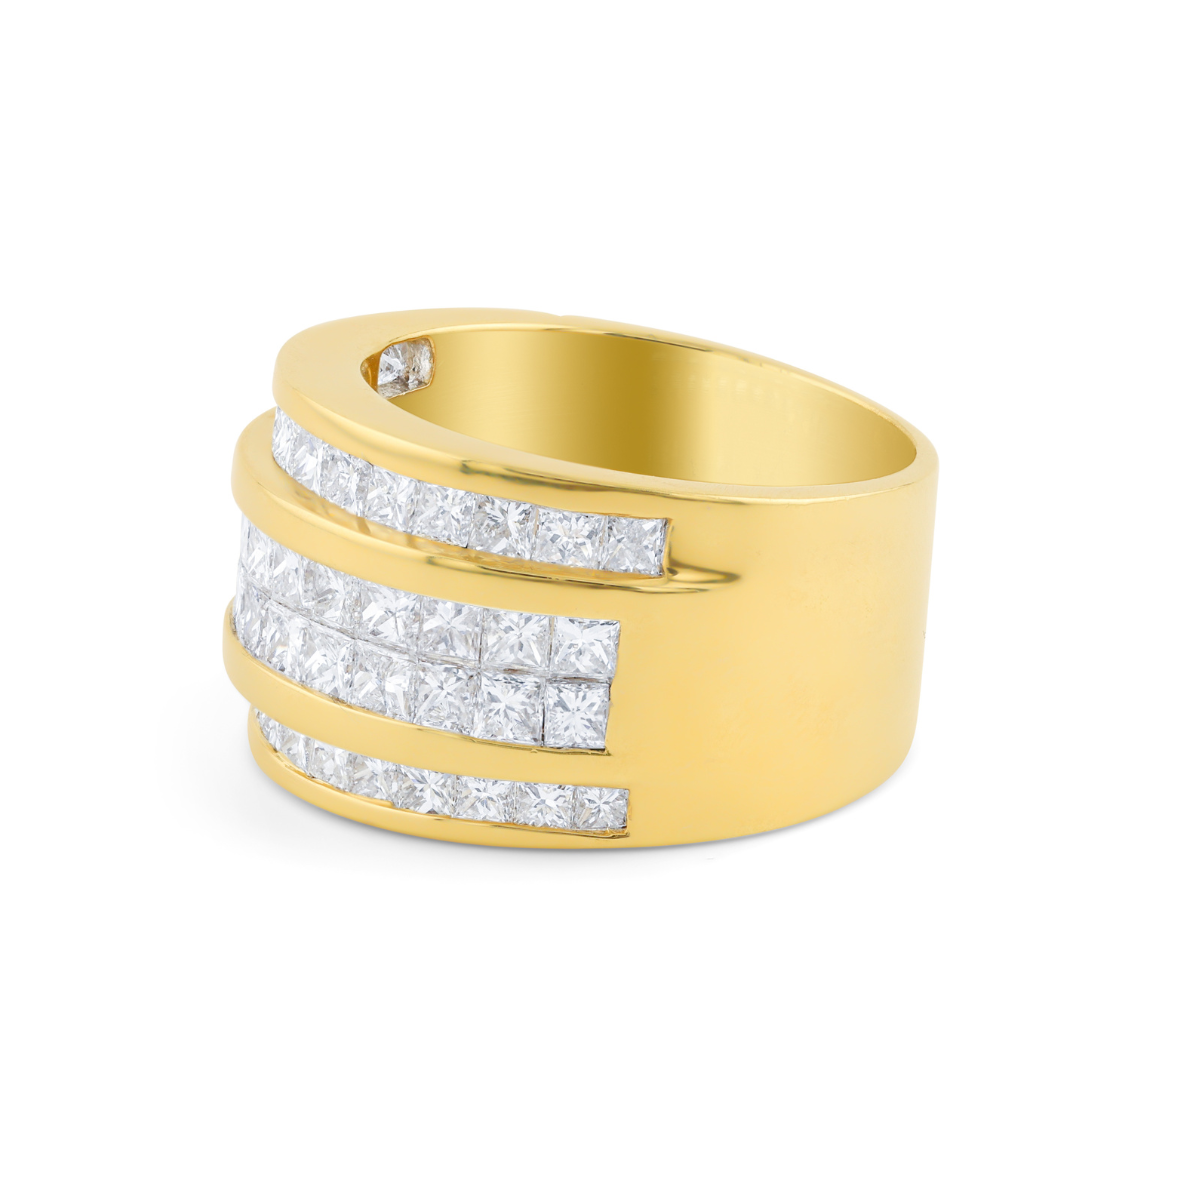 Princess Cut Diamond Fashion Ring